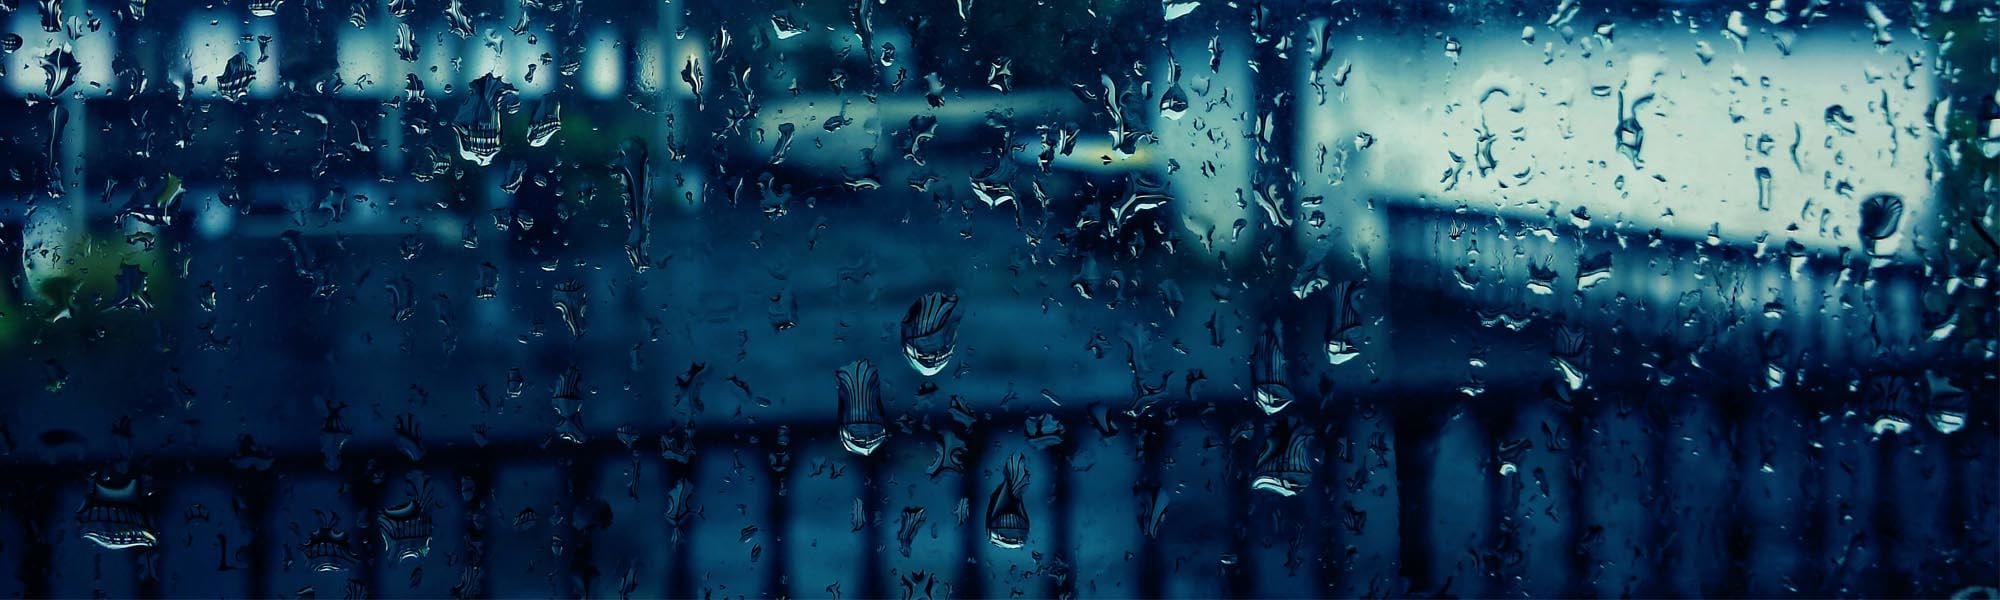 image of rain flood umbrella